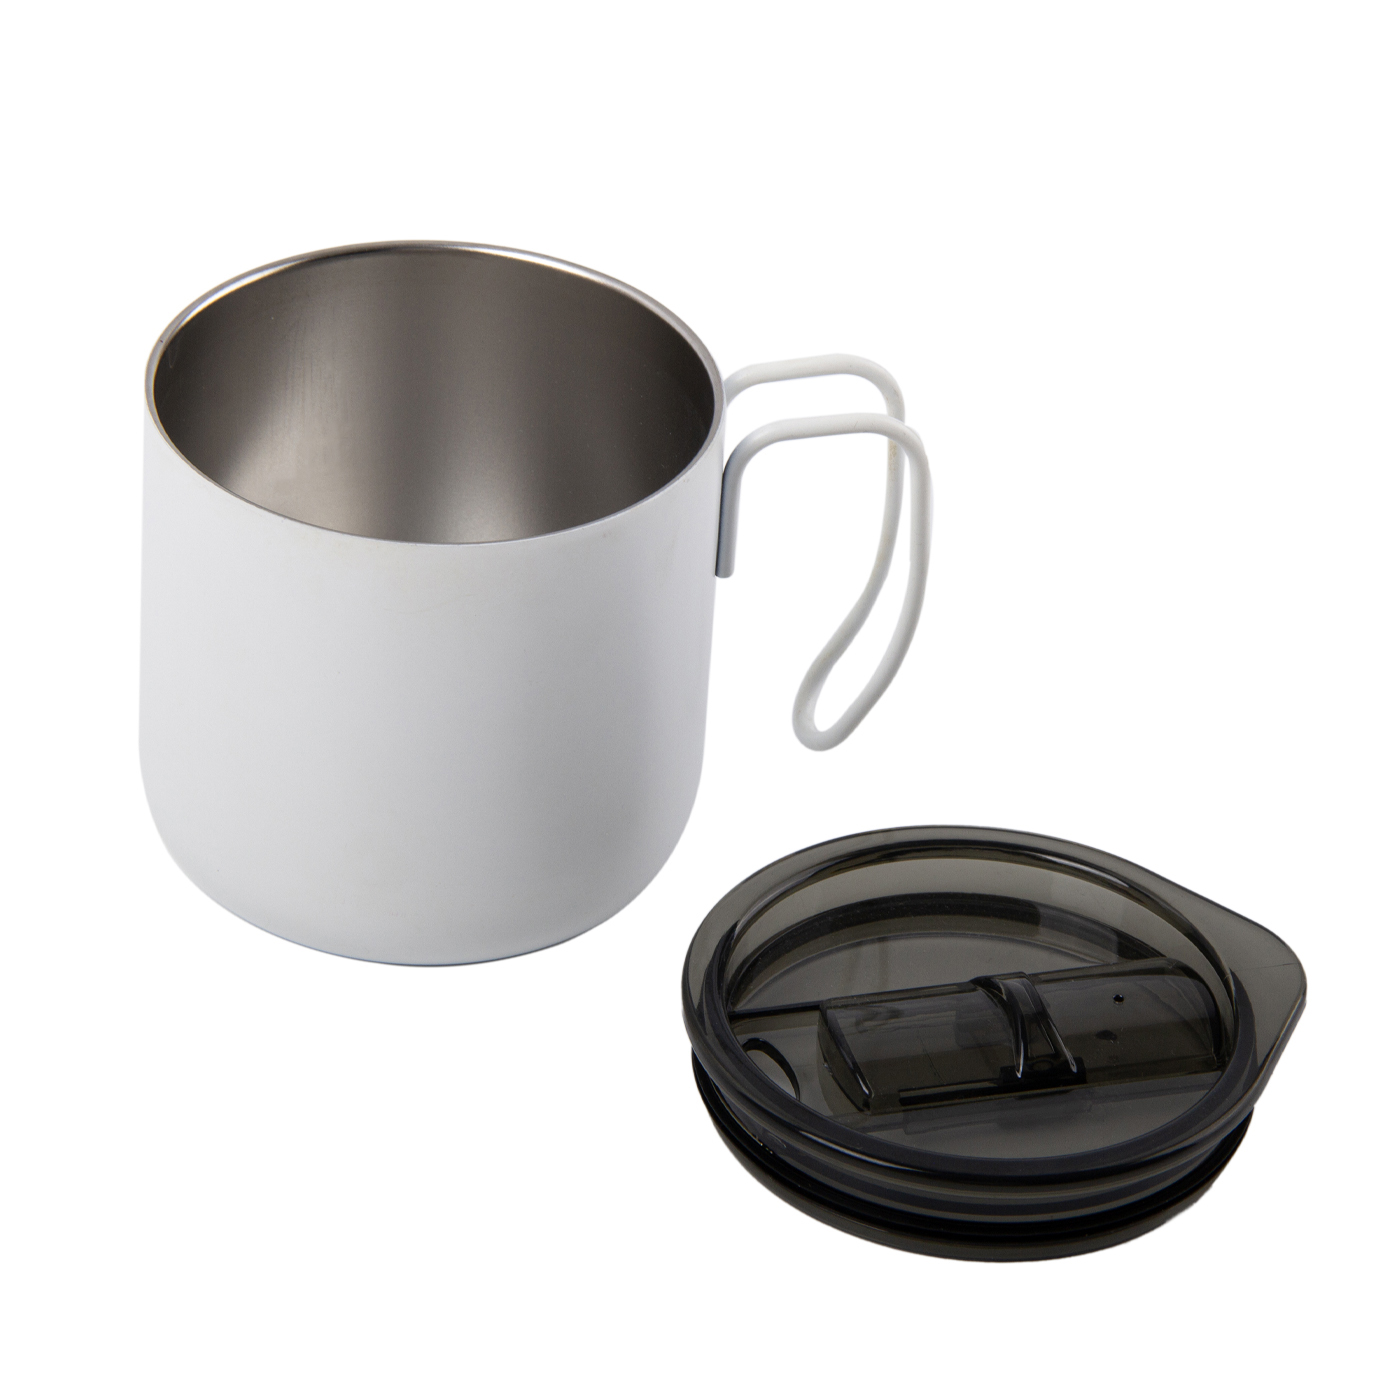 12 oz. Stainless Steel Coffee Mug With Handle2